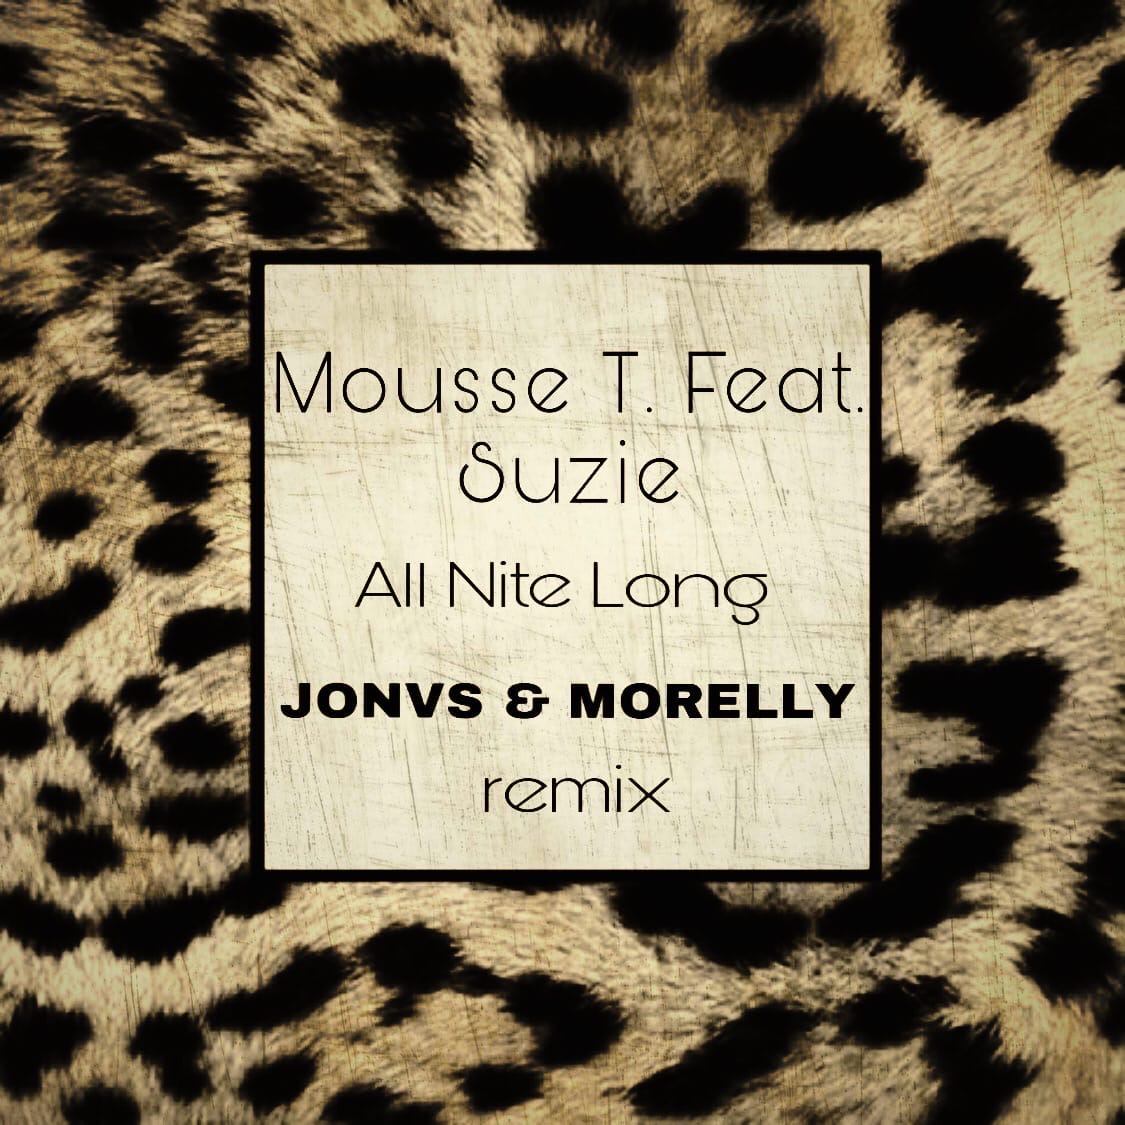 Mousse T. feat. Suzie - All Nite Long (Jonvs & Morelly Remix)